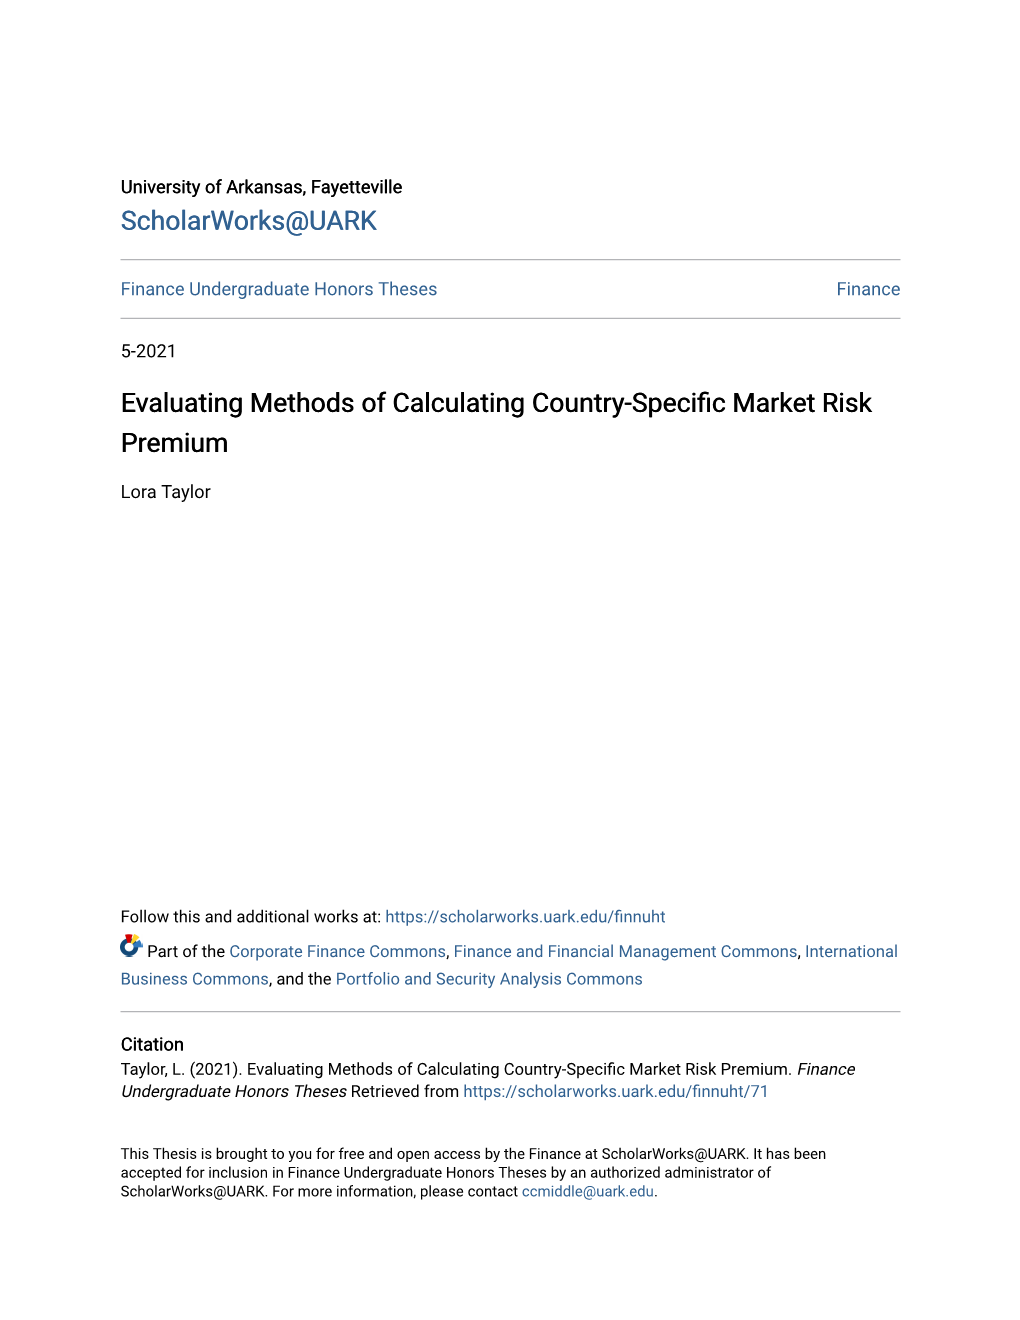 Evaluating Methods of Calculating Country-Specific Market Risk Premium